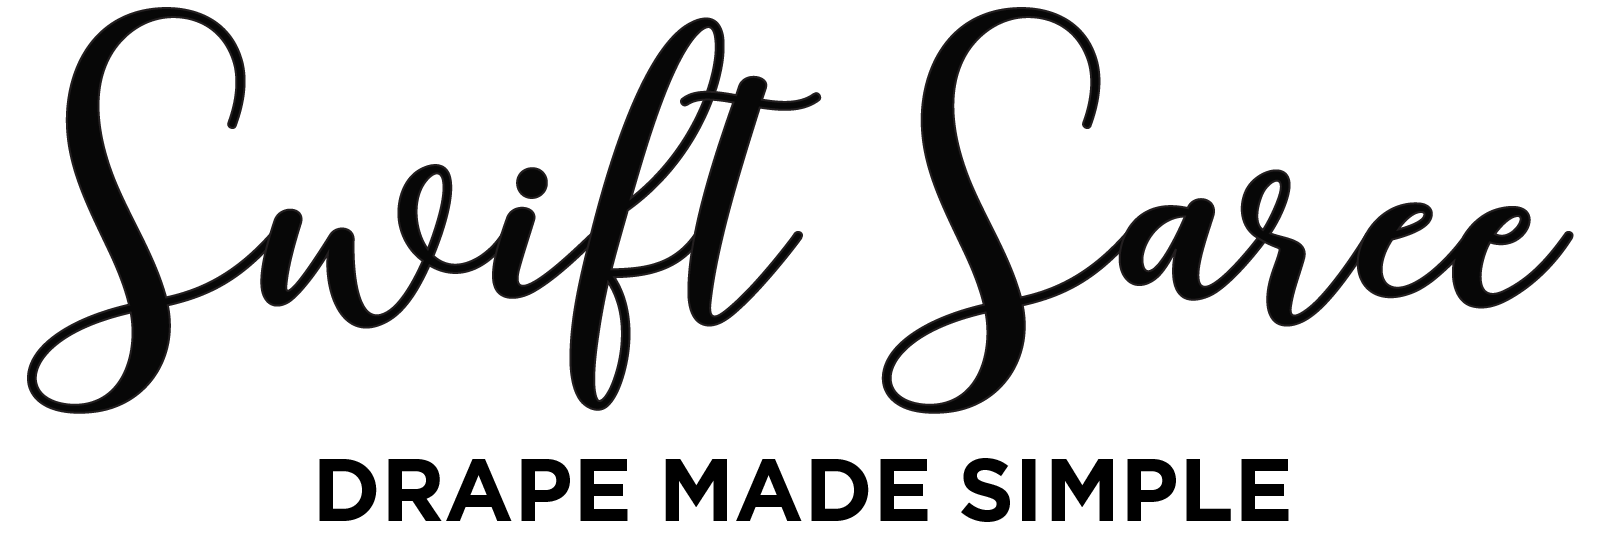 Swift Saree Logo - Drape made Simple